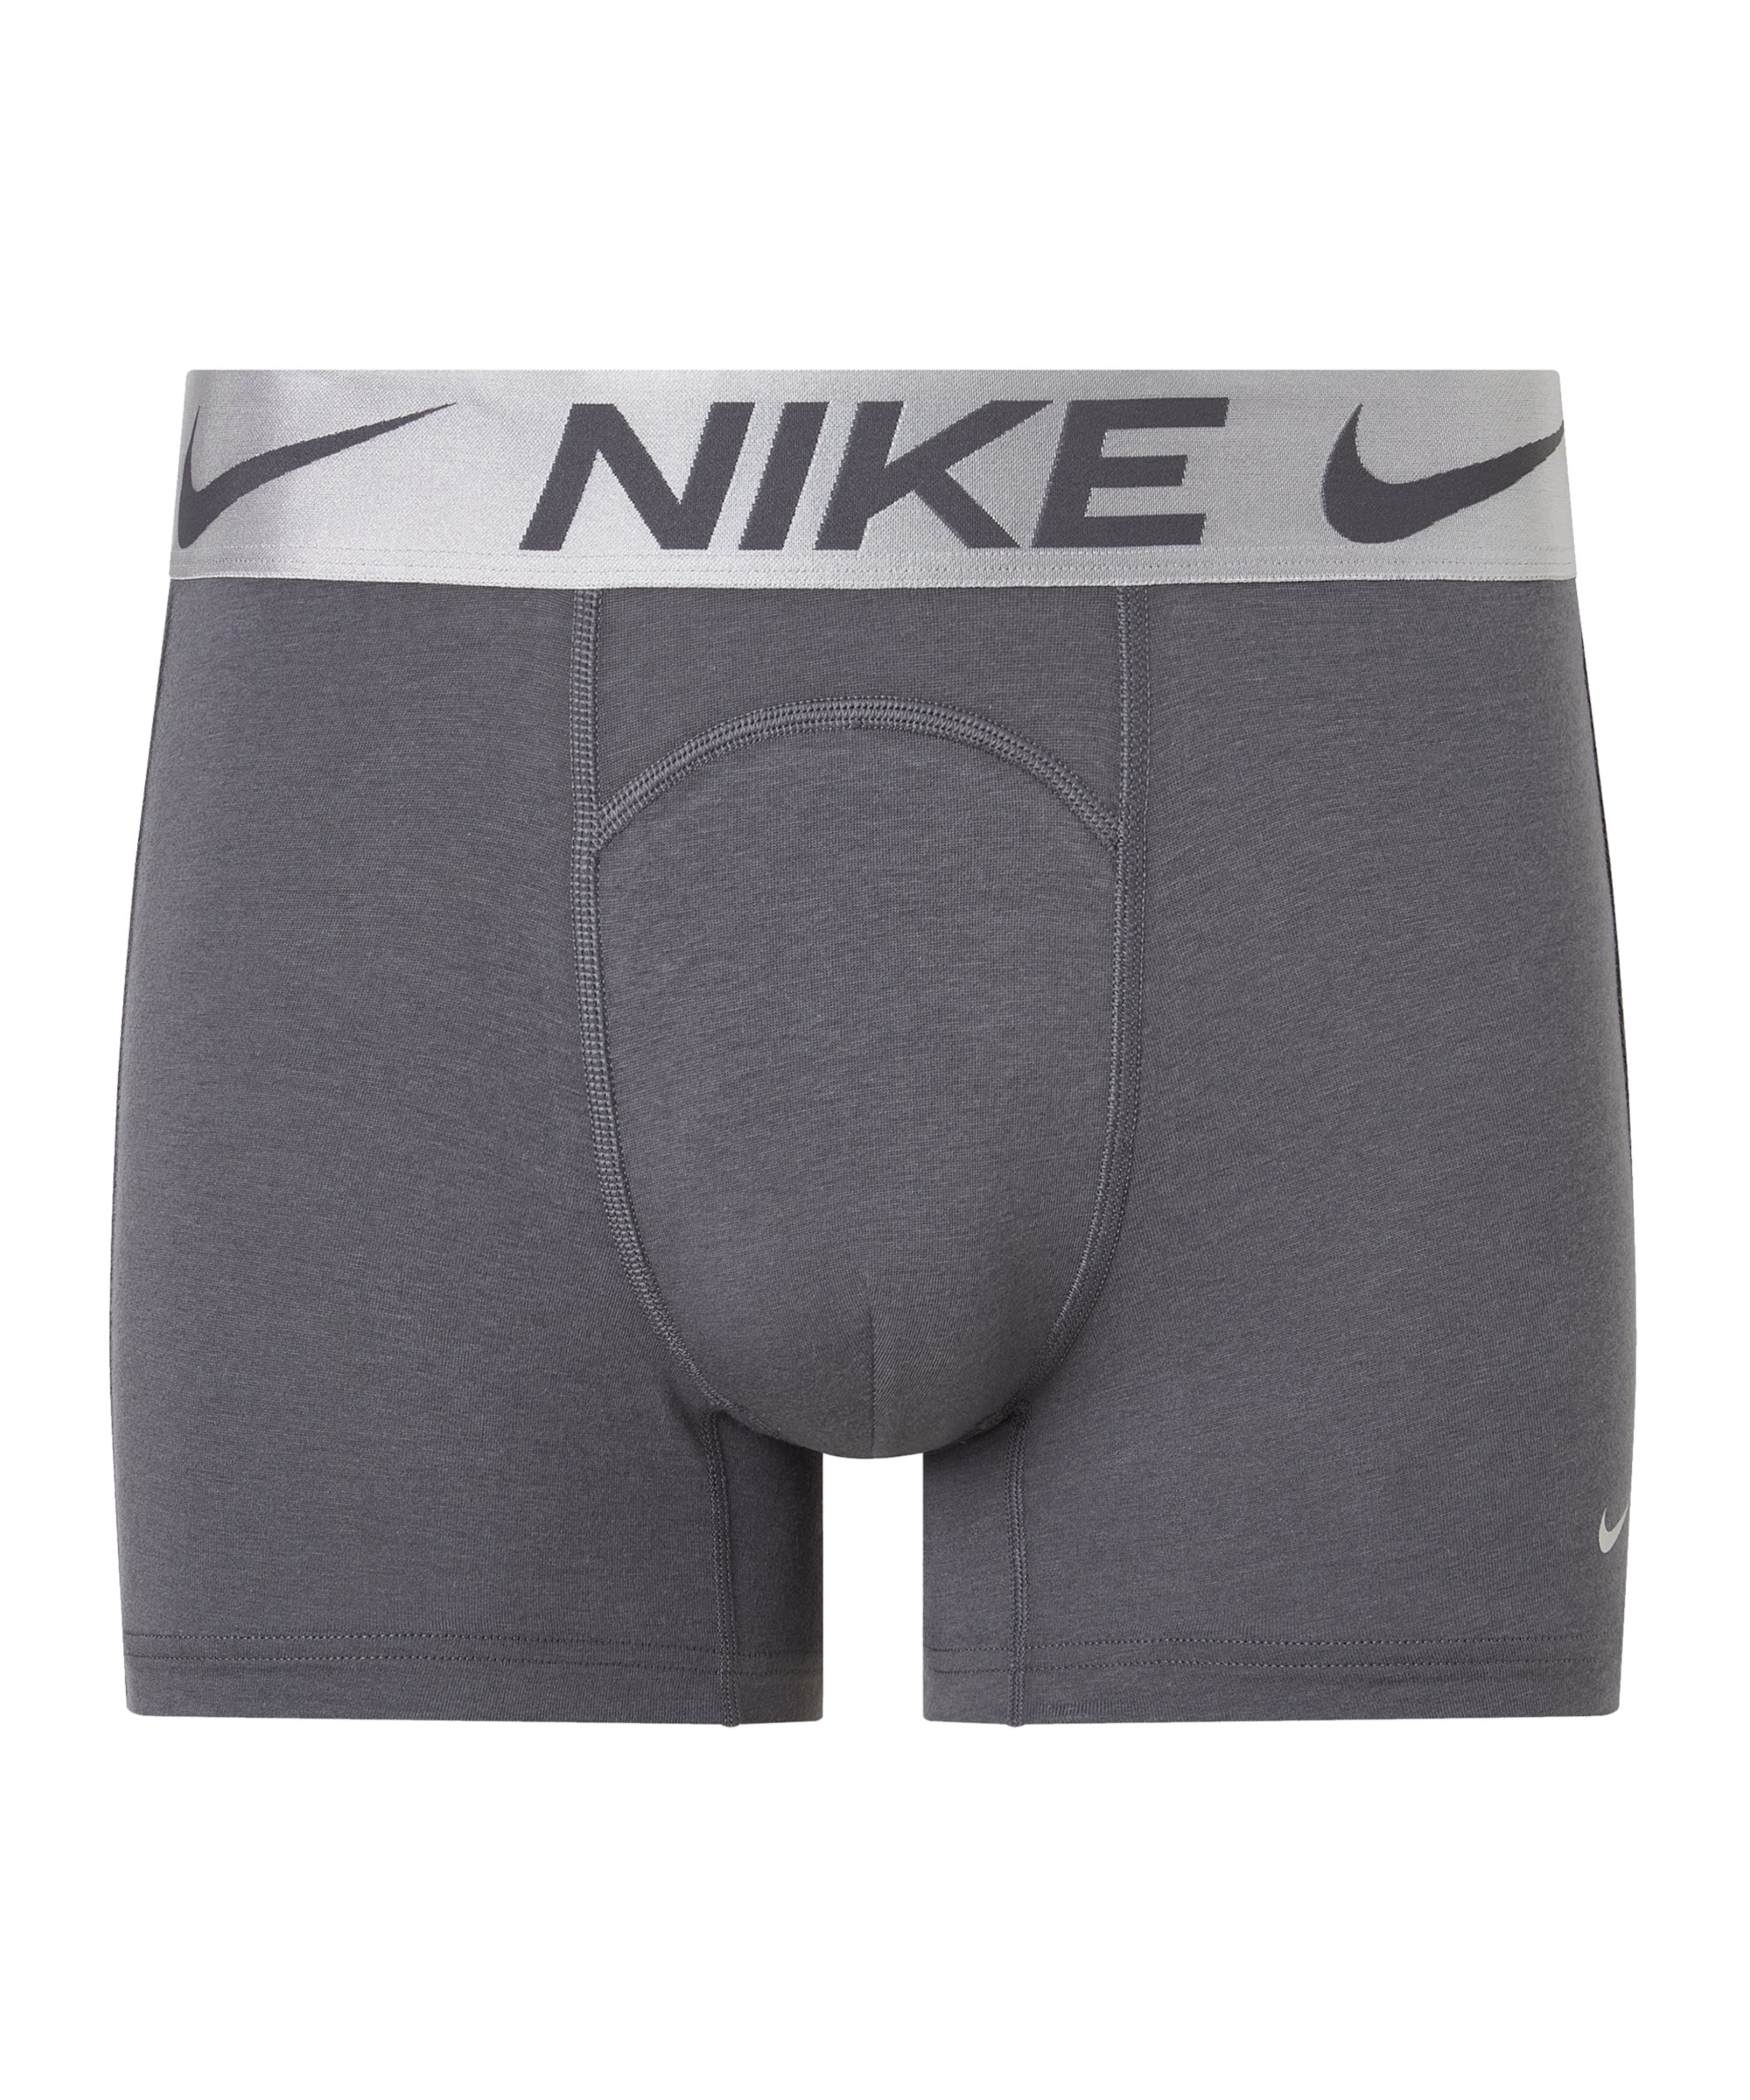 Nike Trunk Boxershort Grau Silber F8WG - grau